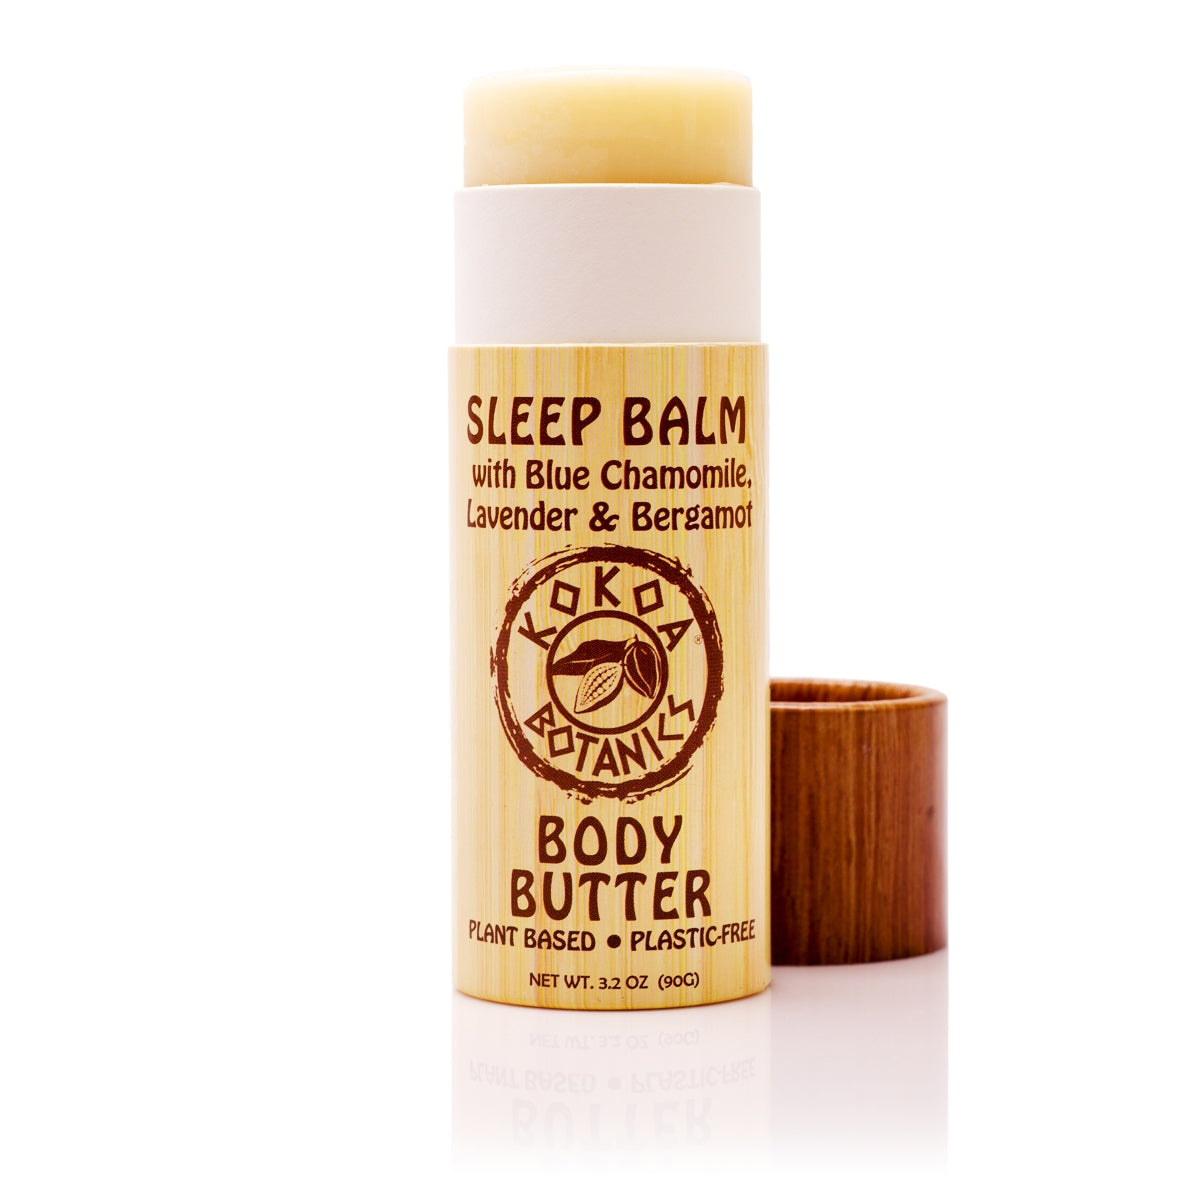 Body Butter - Lotion Bar Gift Set